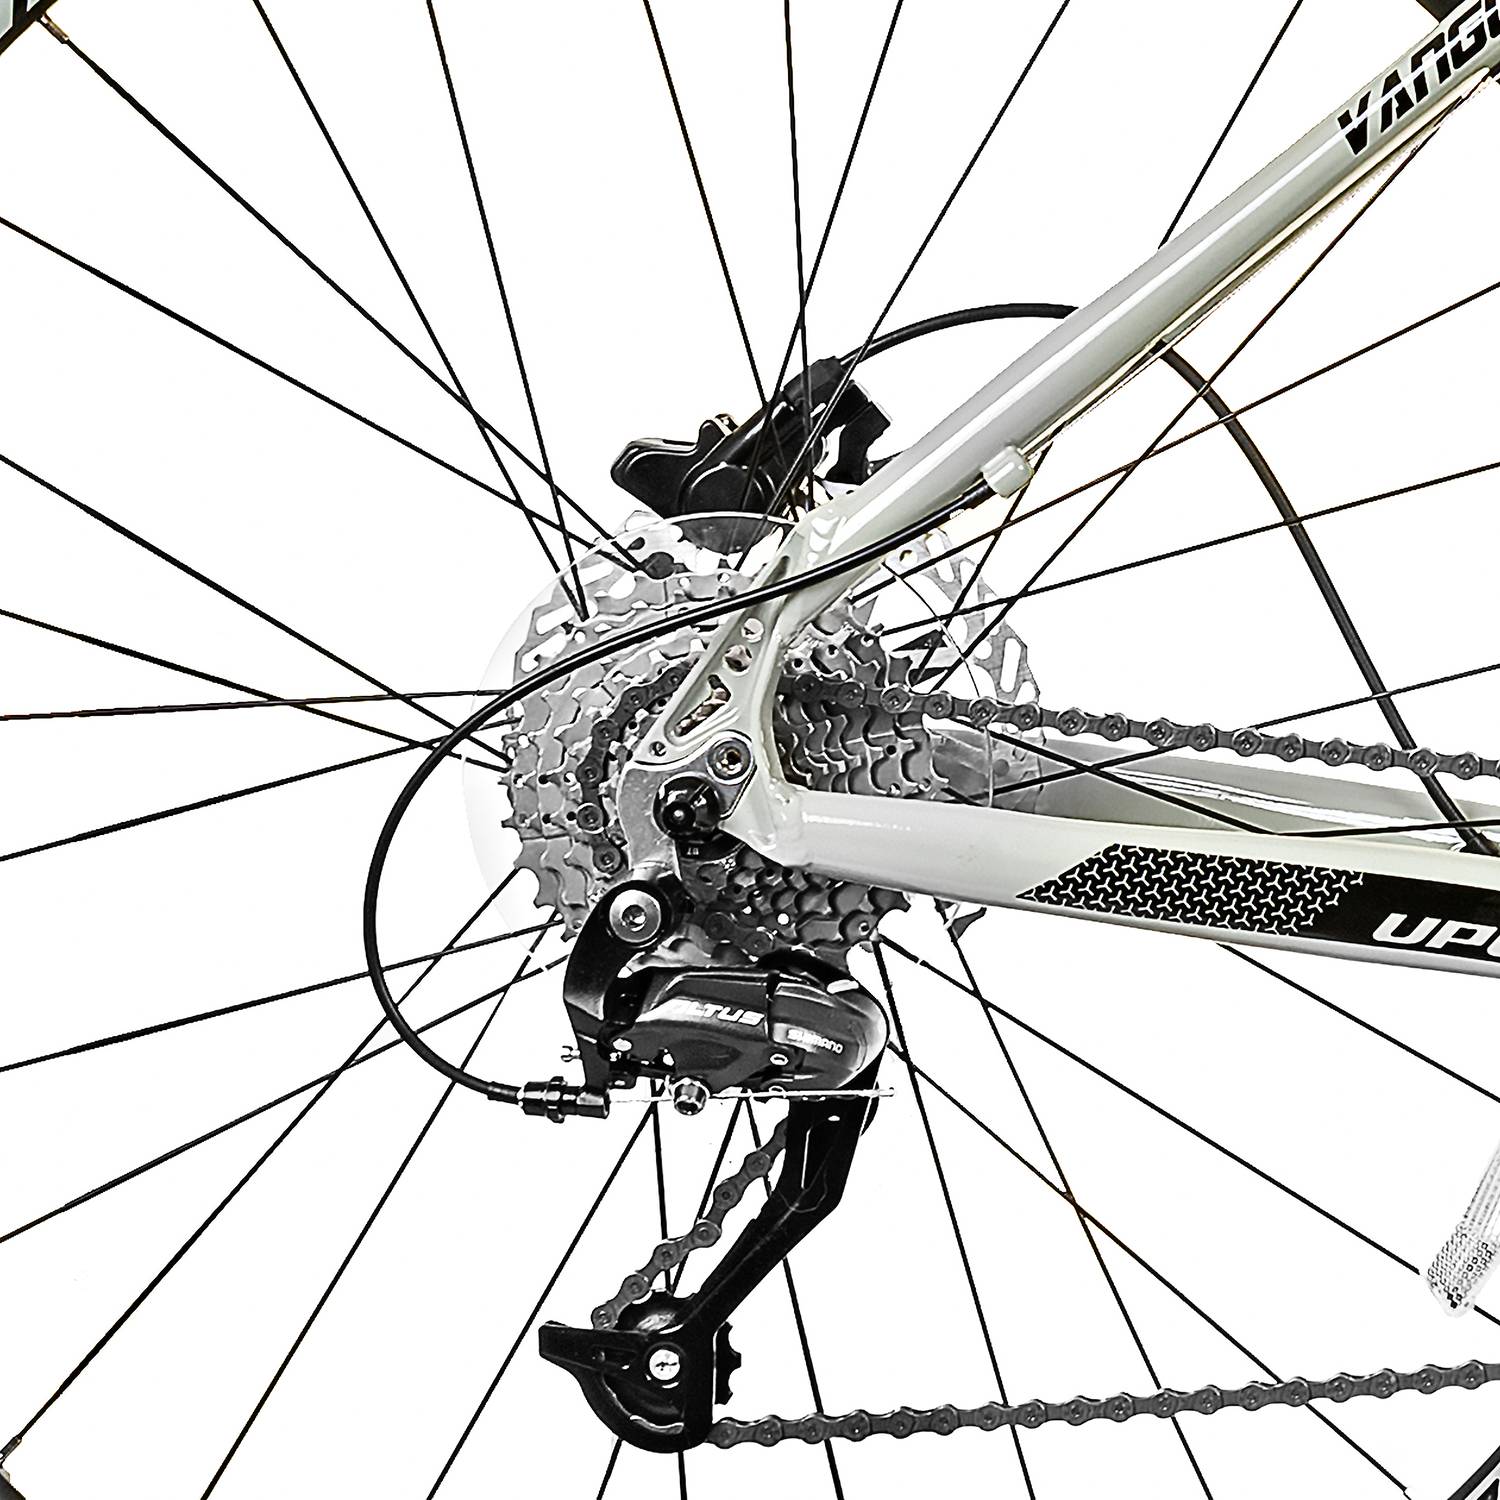 Bicicleta Upland Vanguard 500 - Bike new sport